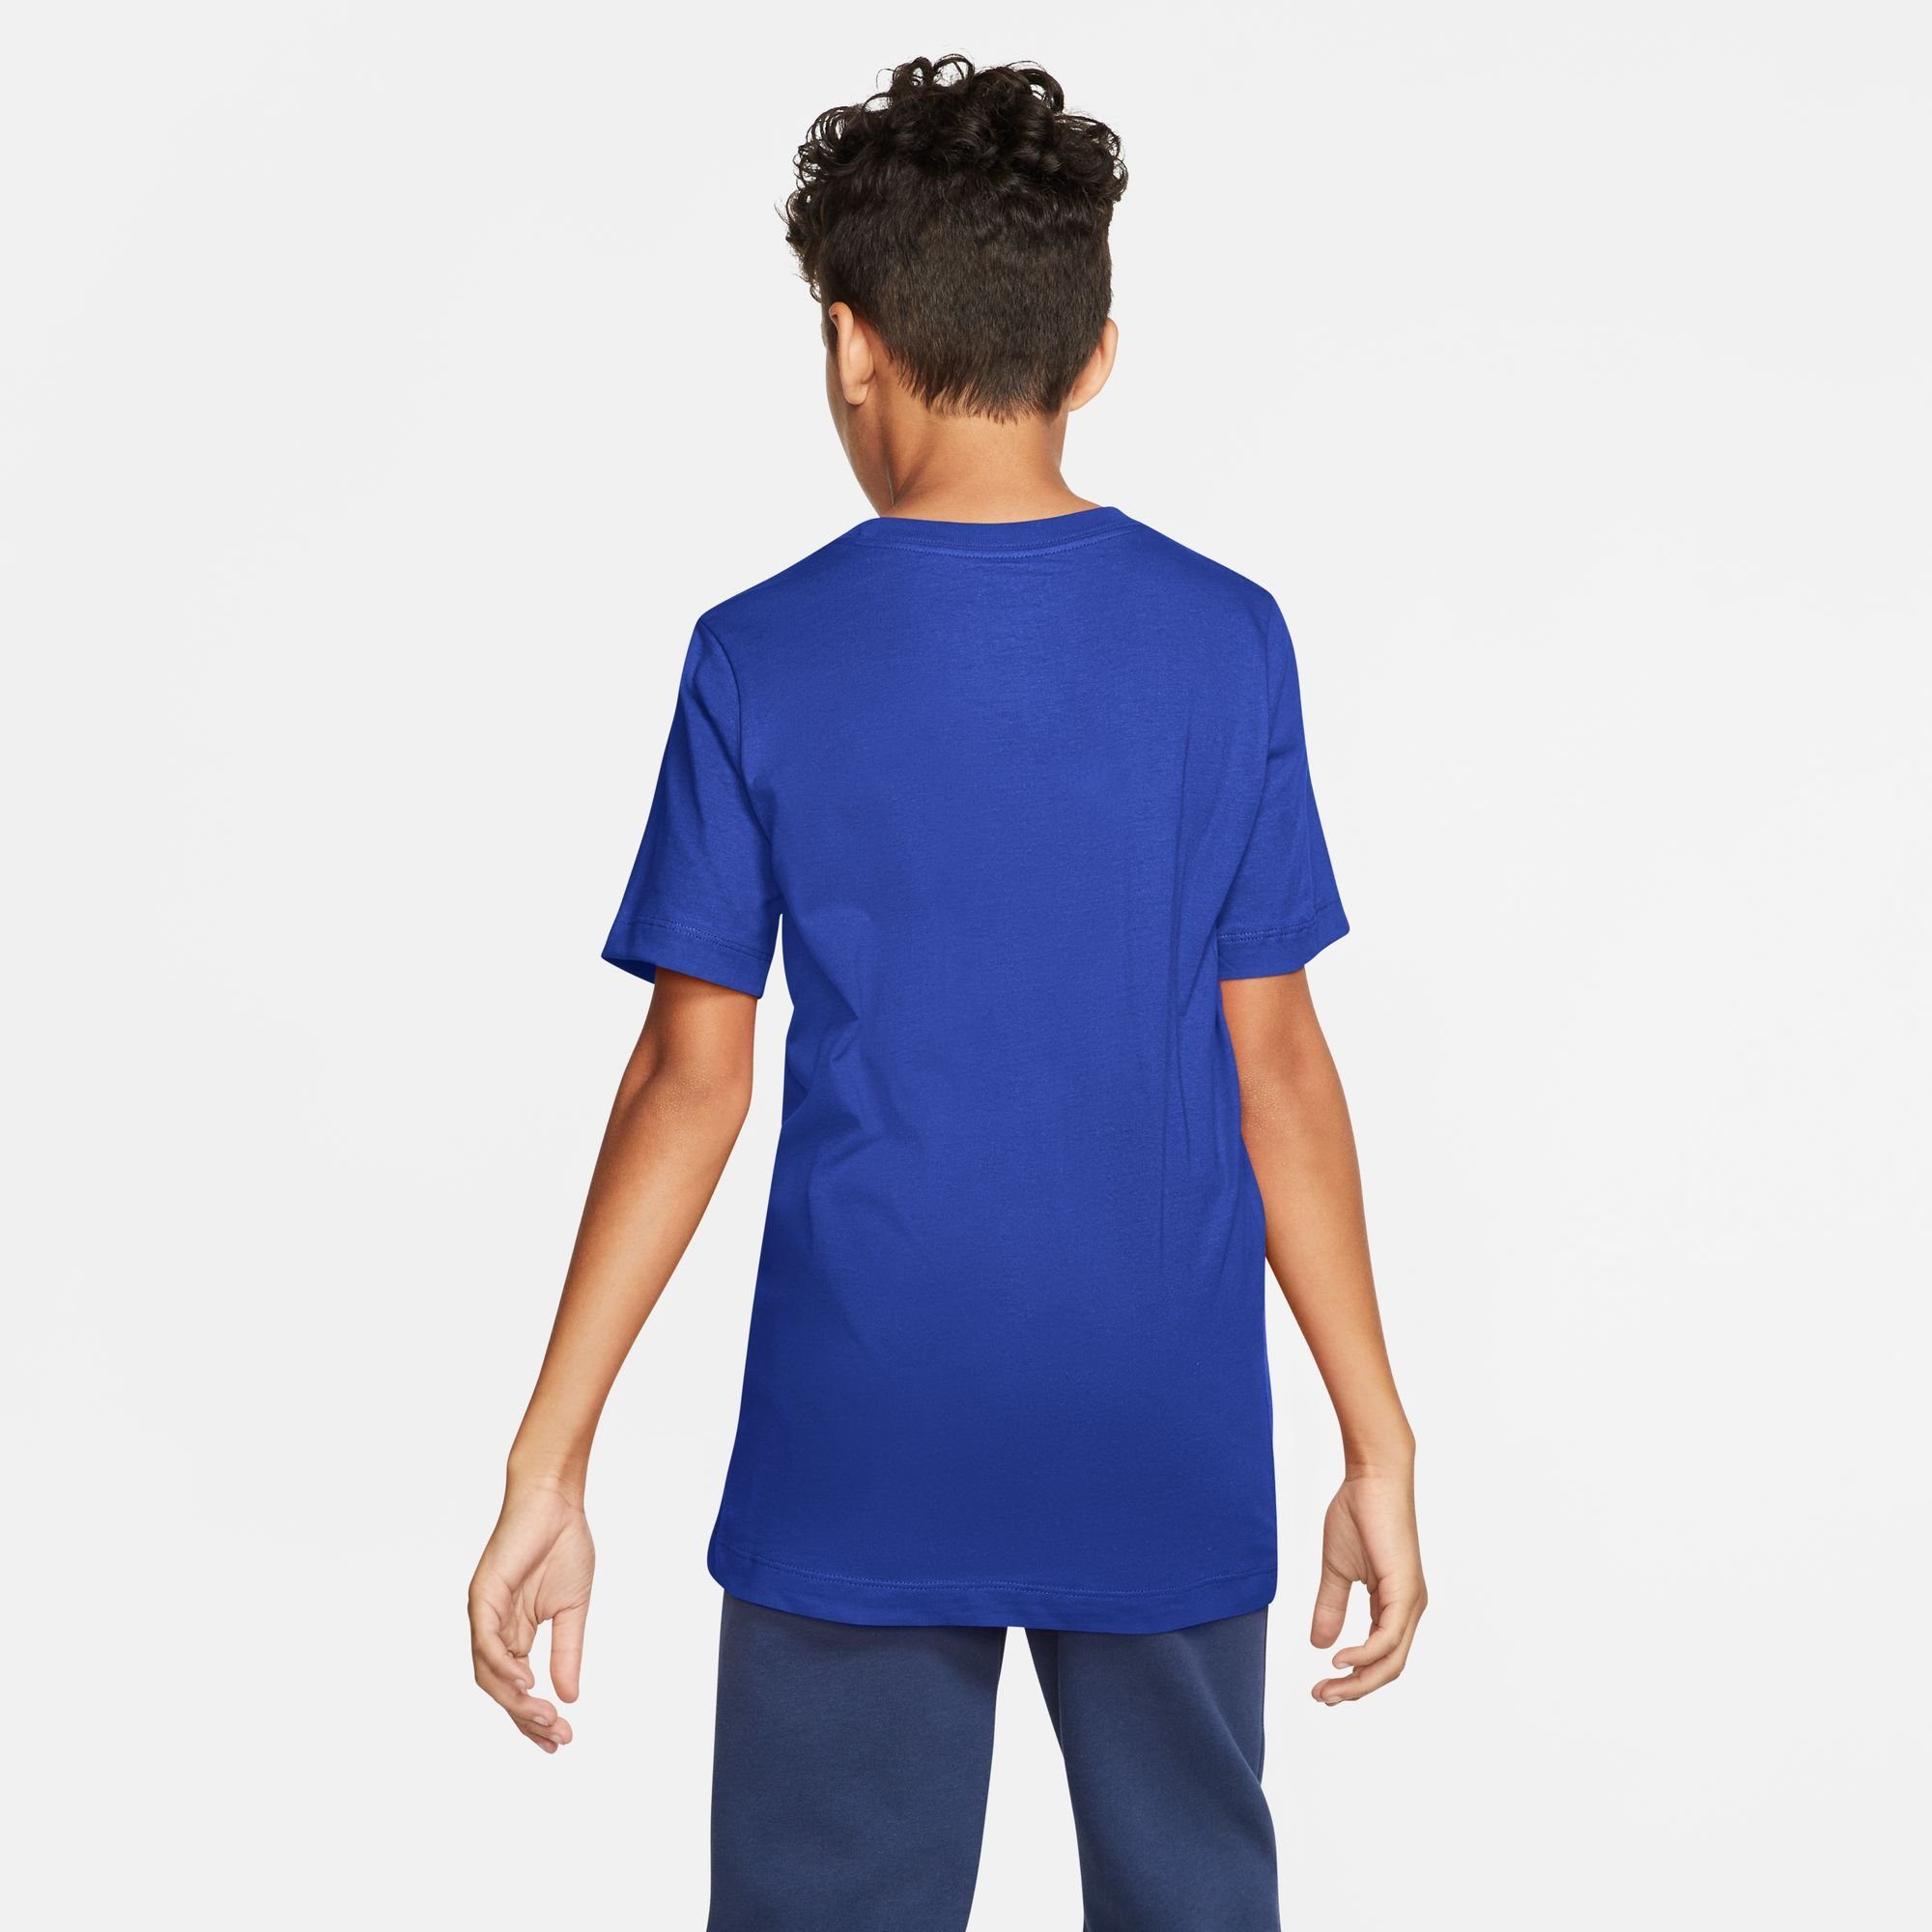 KIDS' GAME Sportswear COTTON ROYAL/MIDNIGHT T-SHIRT NAVY T-Shirt BIG Nike